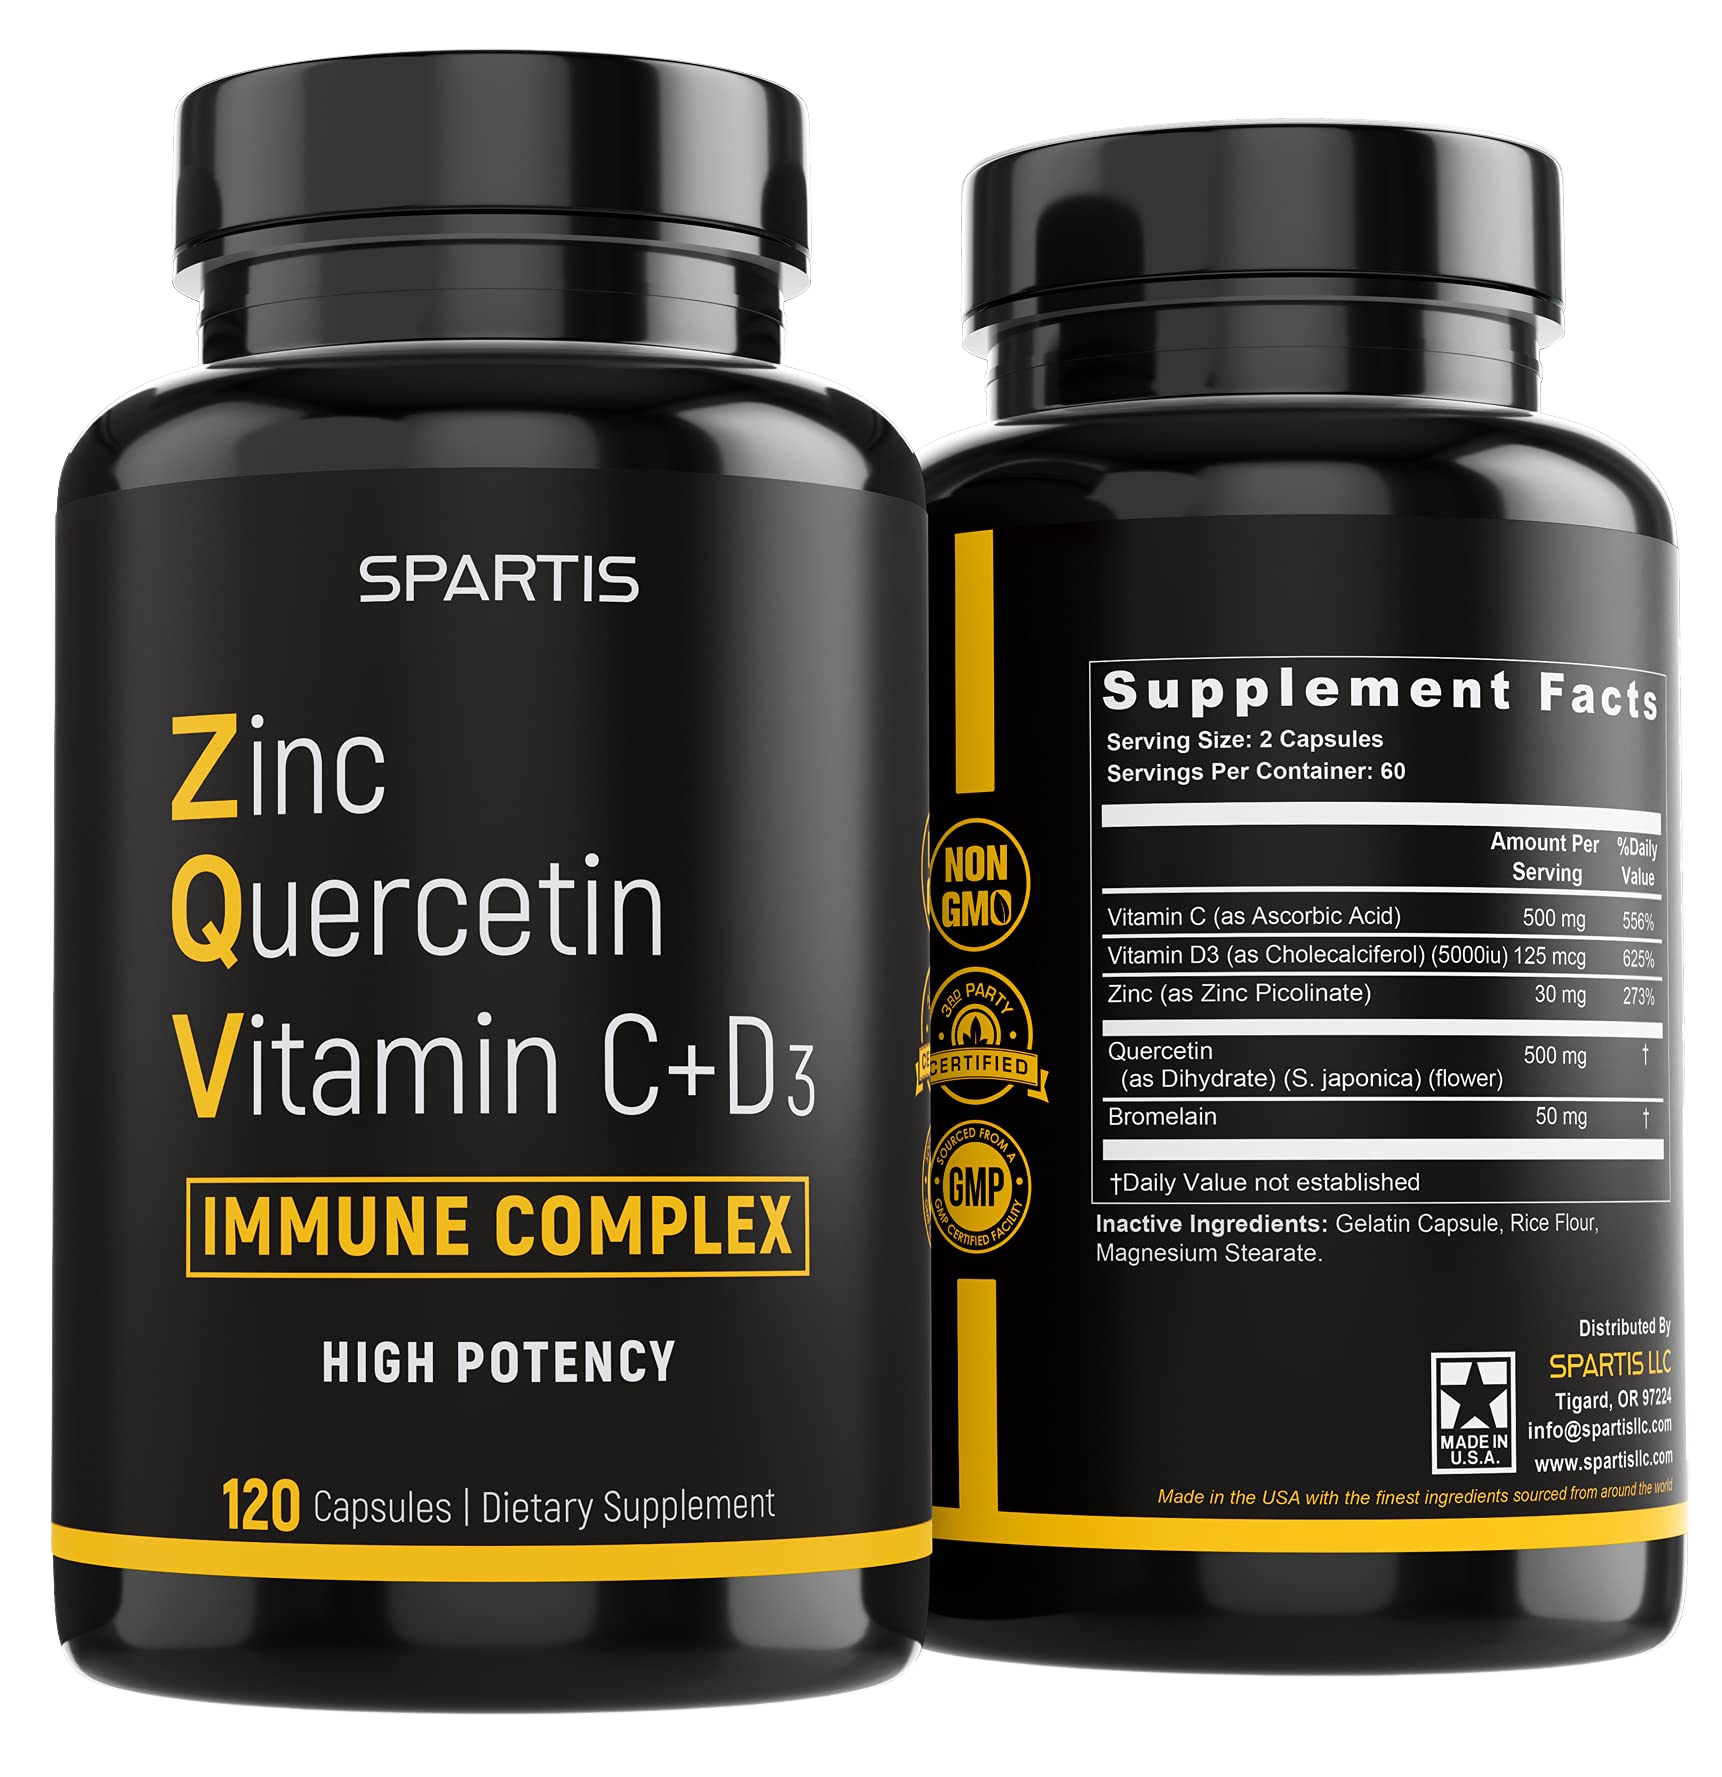 SPARTIS Zinc Quercetin 500mg with Vitamin C Vitamin D3 Bromelain Immune Support High Potency Quercetin Zinc Supplement ZQV